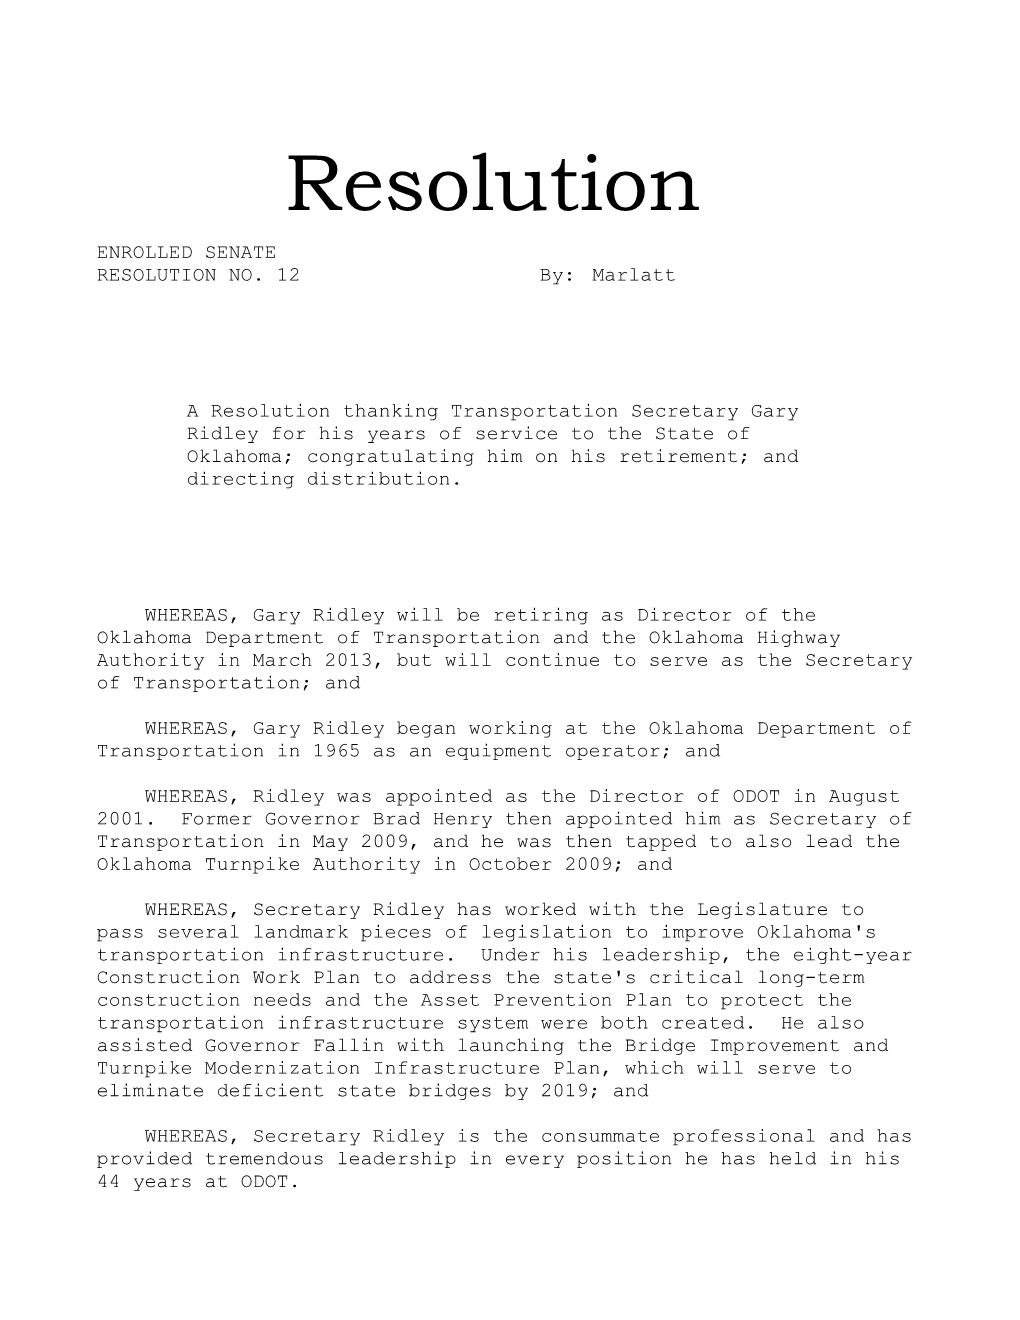 Resolution ENROLLED SENATE RESOLUTION NO